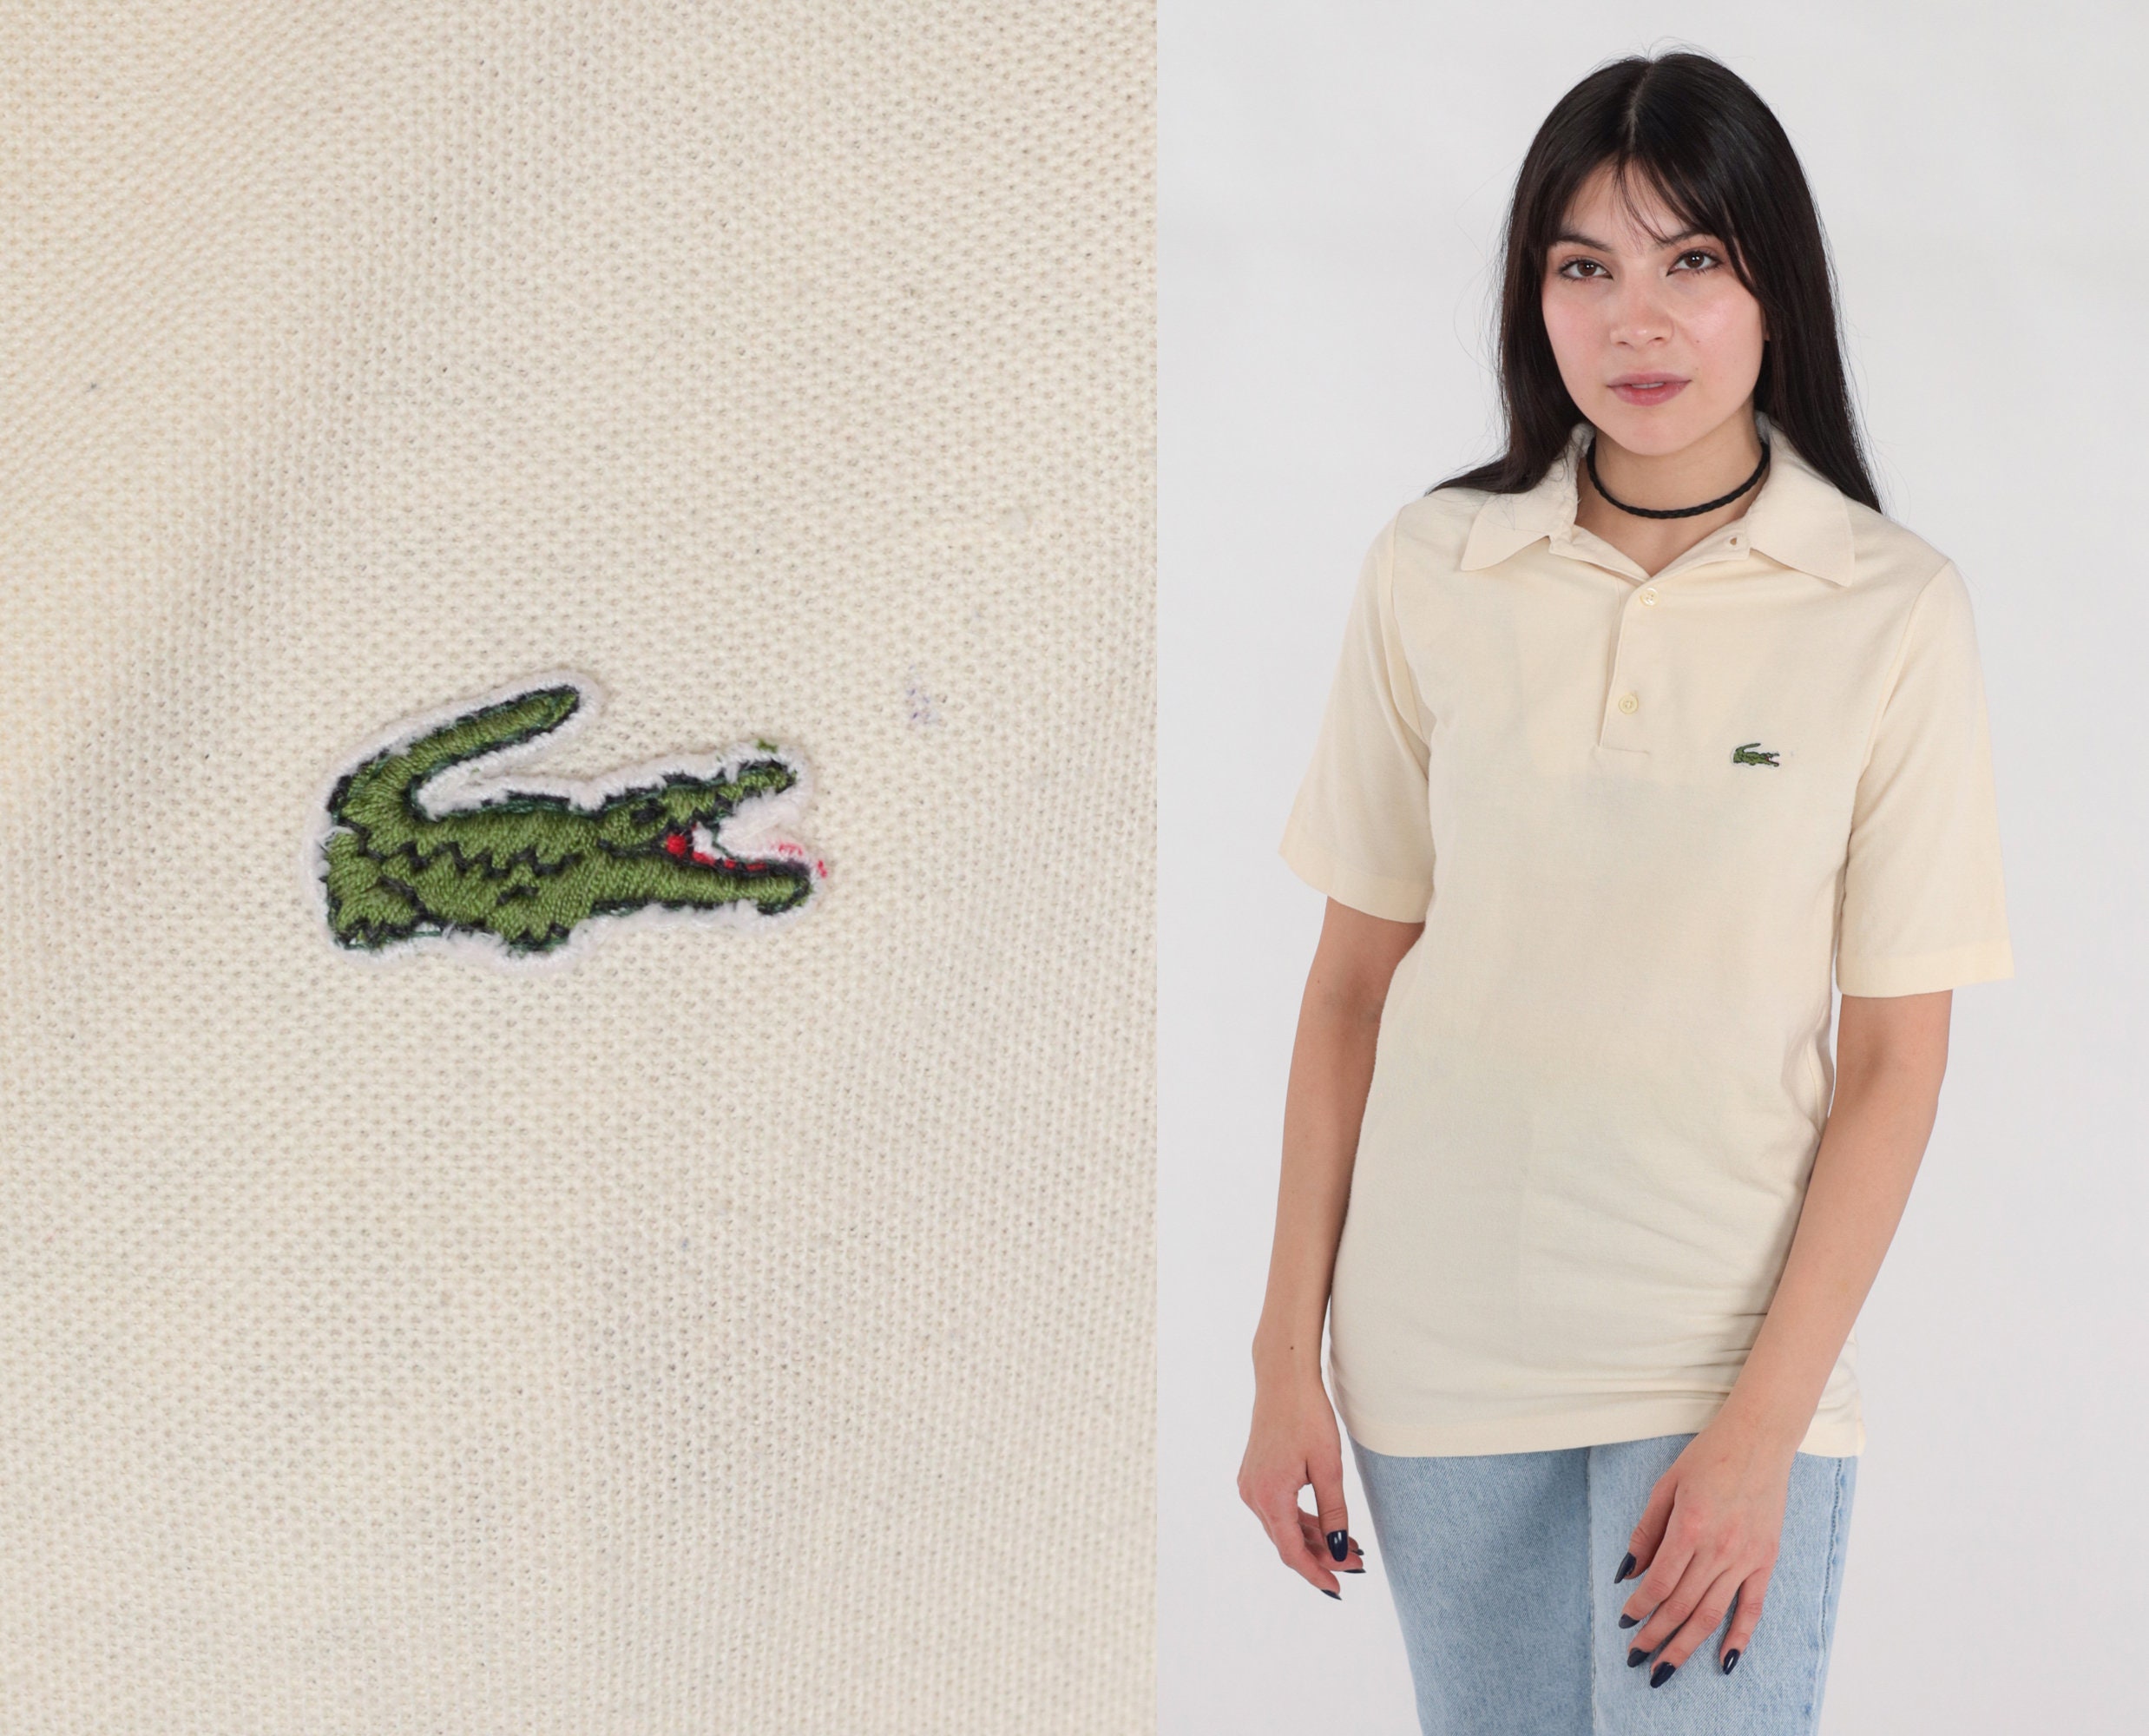 Lacoste Shirt Collared Shirt Izod Crocodile T-Shirt Retro Preppy Collar Top Basic Simple Plain Neutral Vintage 1980s Small S